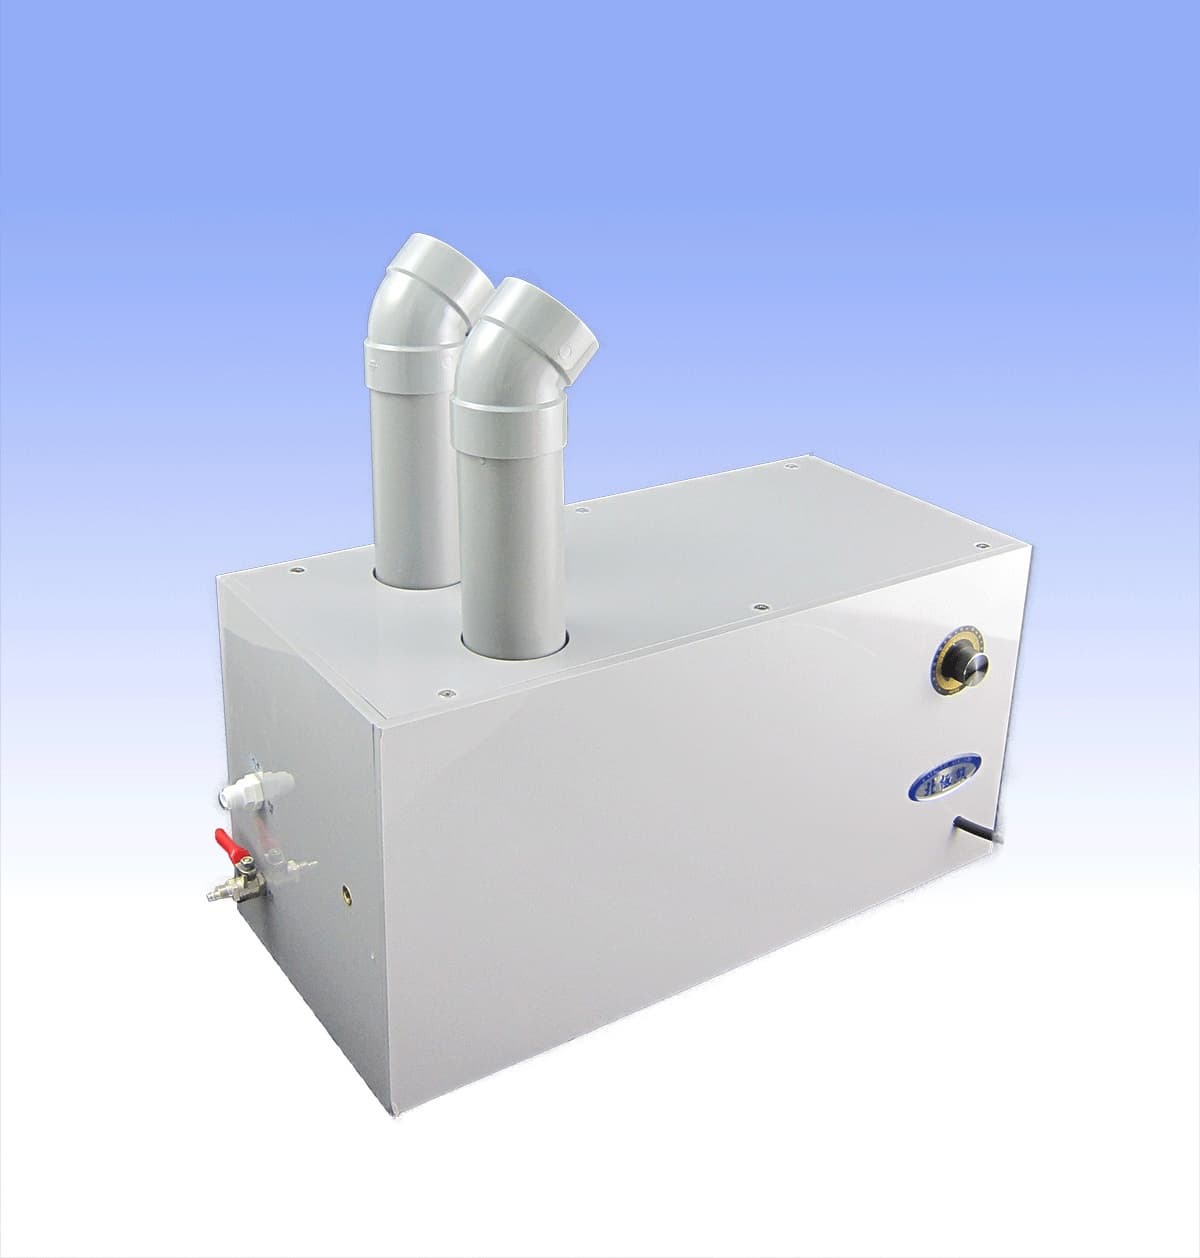 Polar Bear Ultrasonic Humidifier